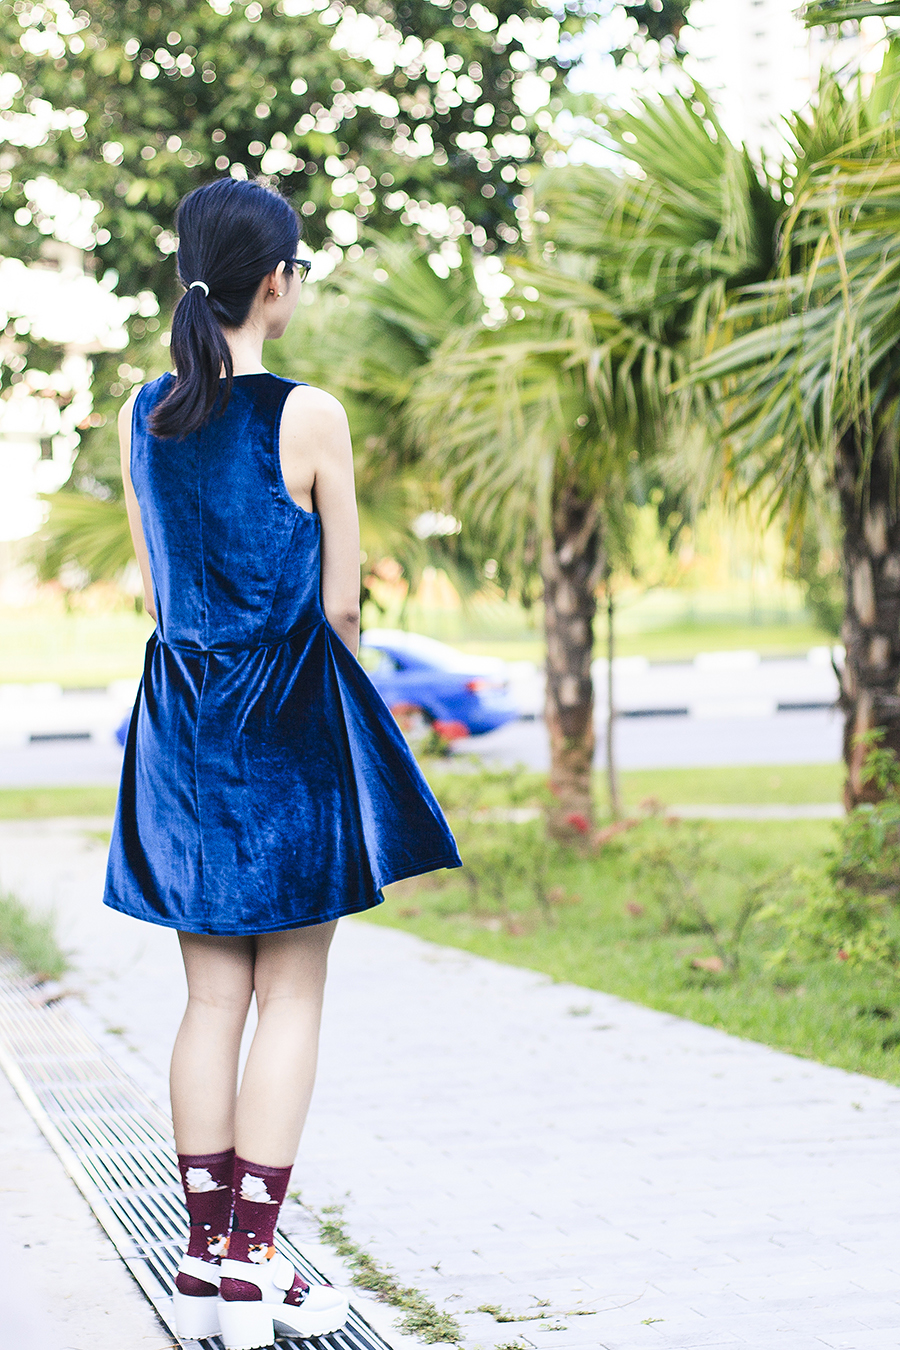 Blue velvet dress from Cotton On, black frame prescription glasses from Gap, cat socks from Taobao, white platform sandals from Taobao.